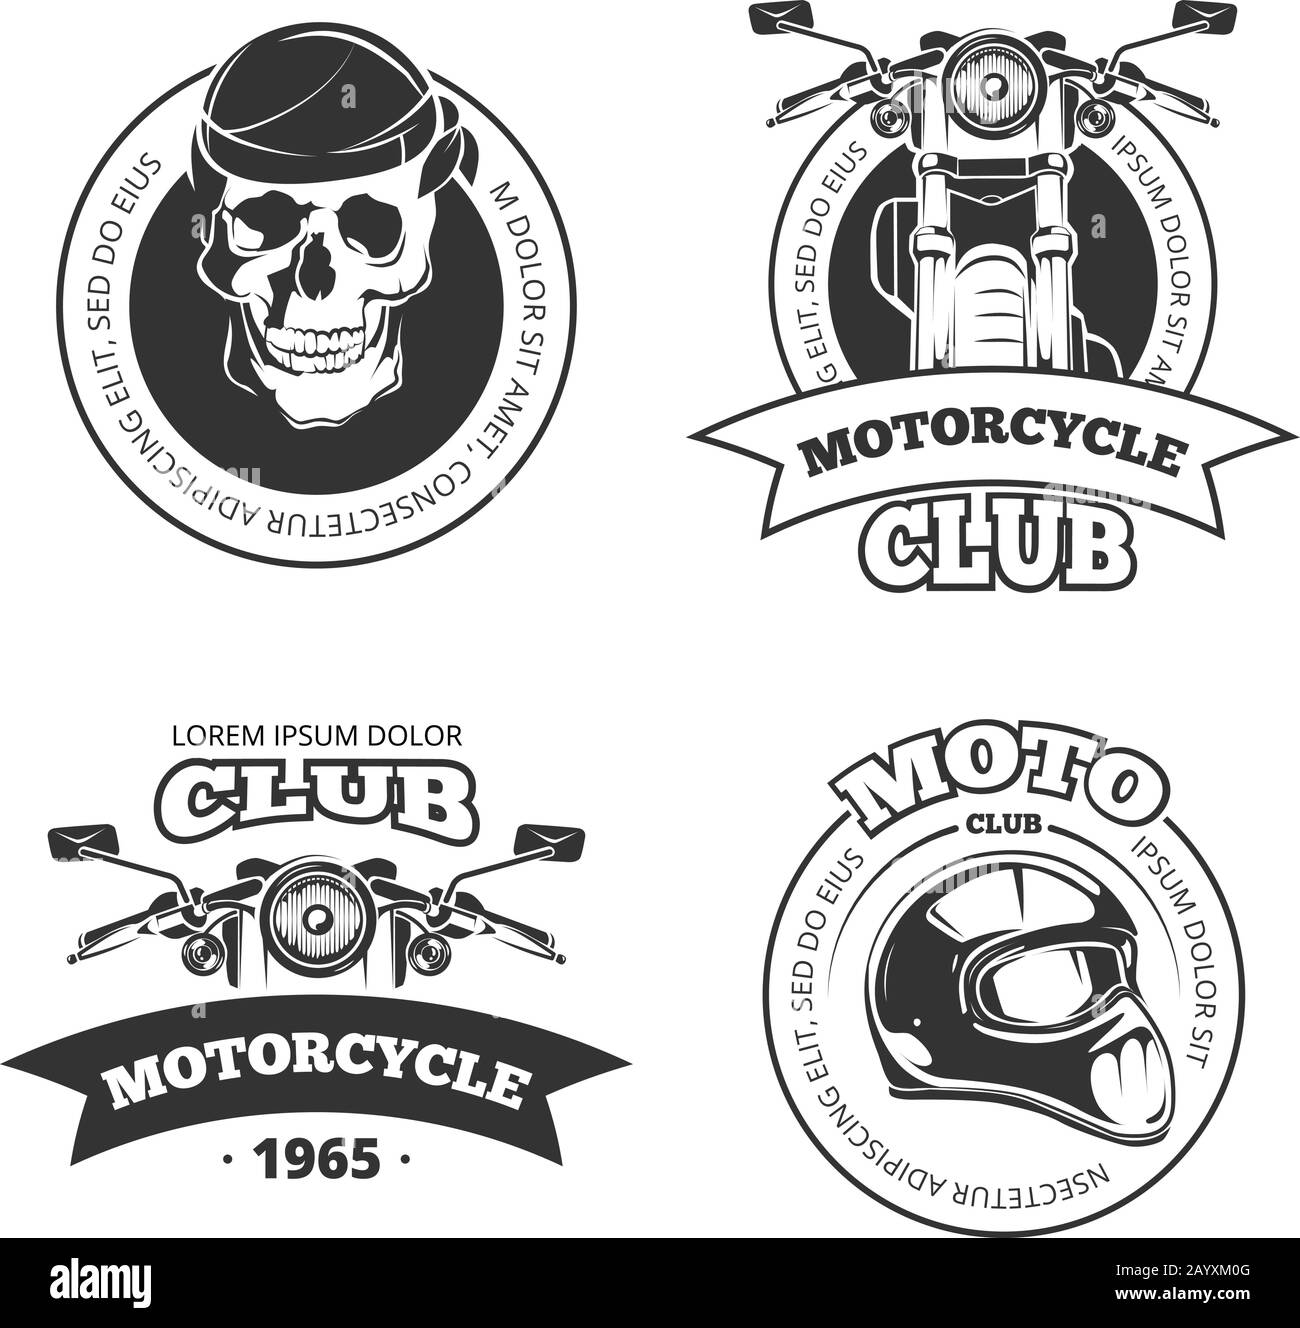 Vintage vector motorcycle or motorbike club logo set. Chopper helmet and skull for motorcycle club Stock Vector